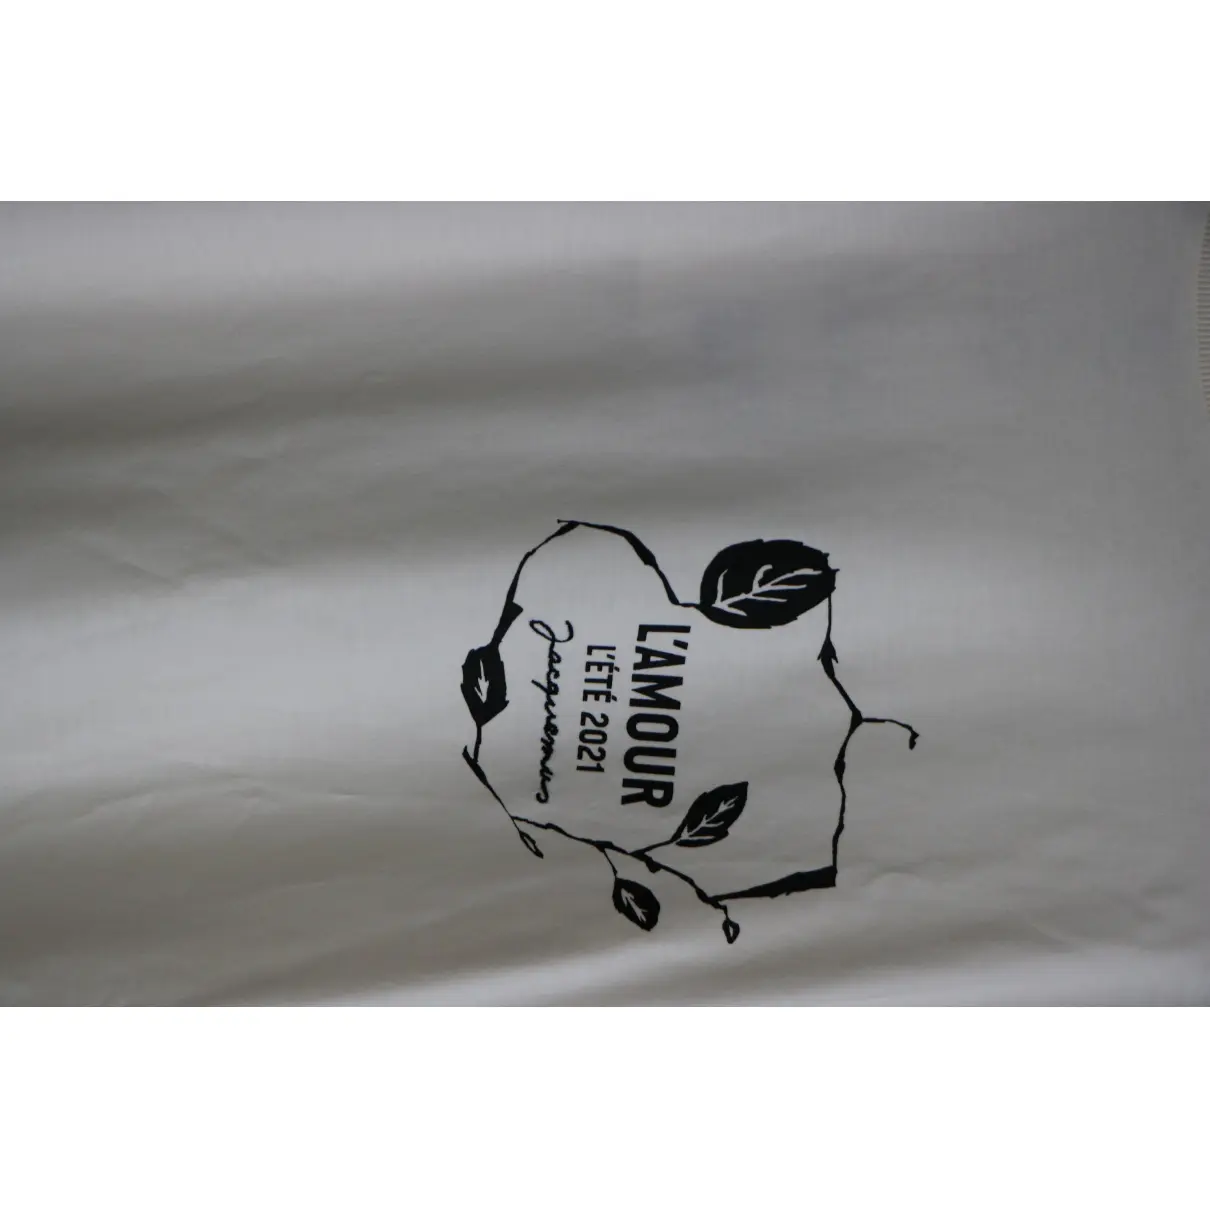 Buy Jacquemus T-shirt online